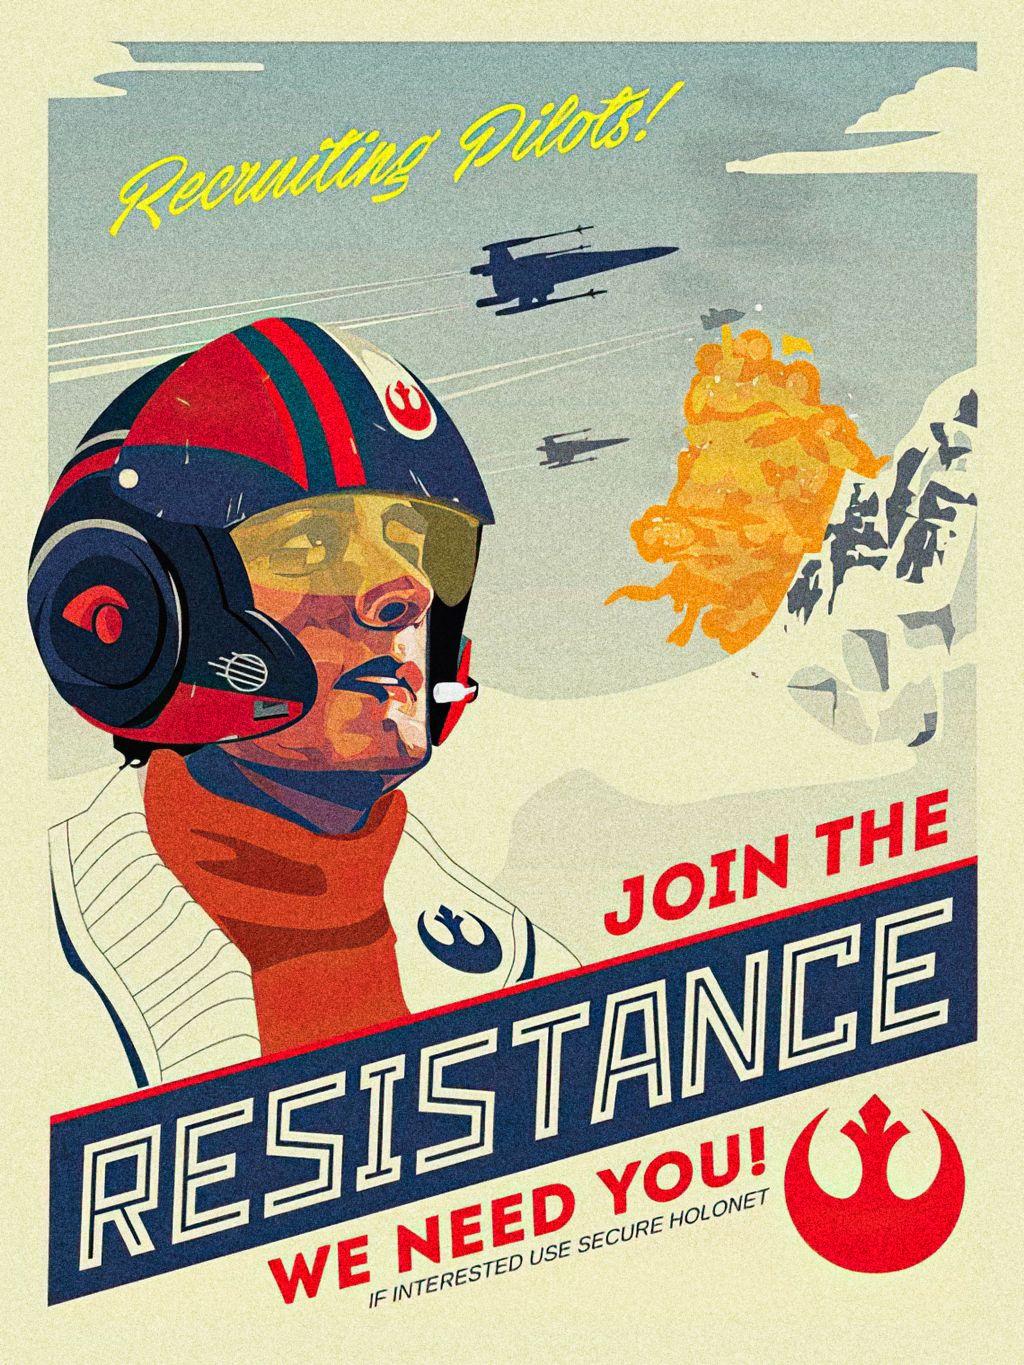 Join Rebel Alliance Recruitment Resistance Star Wars Propaganda Vintage Retro Wall Art Decor PRINT POSTER